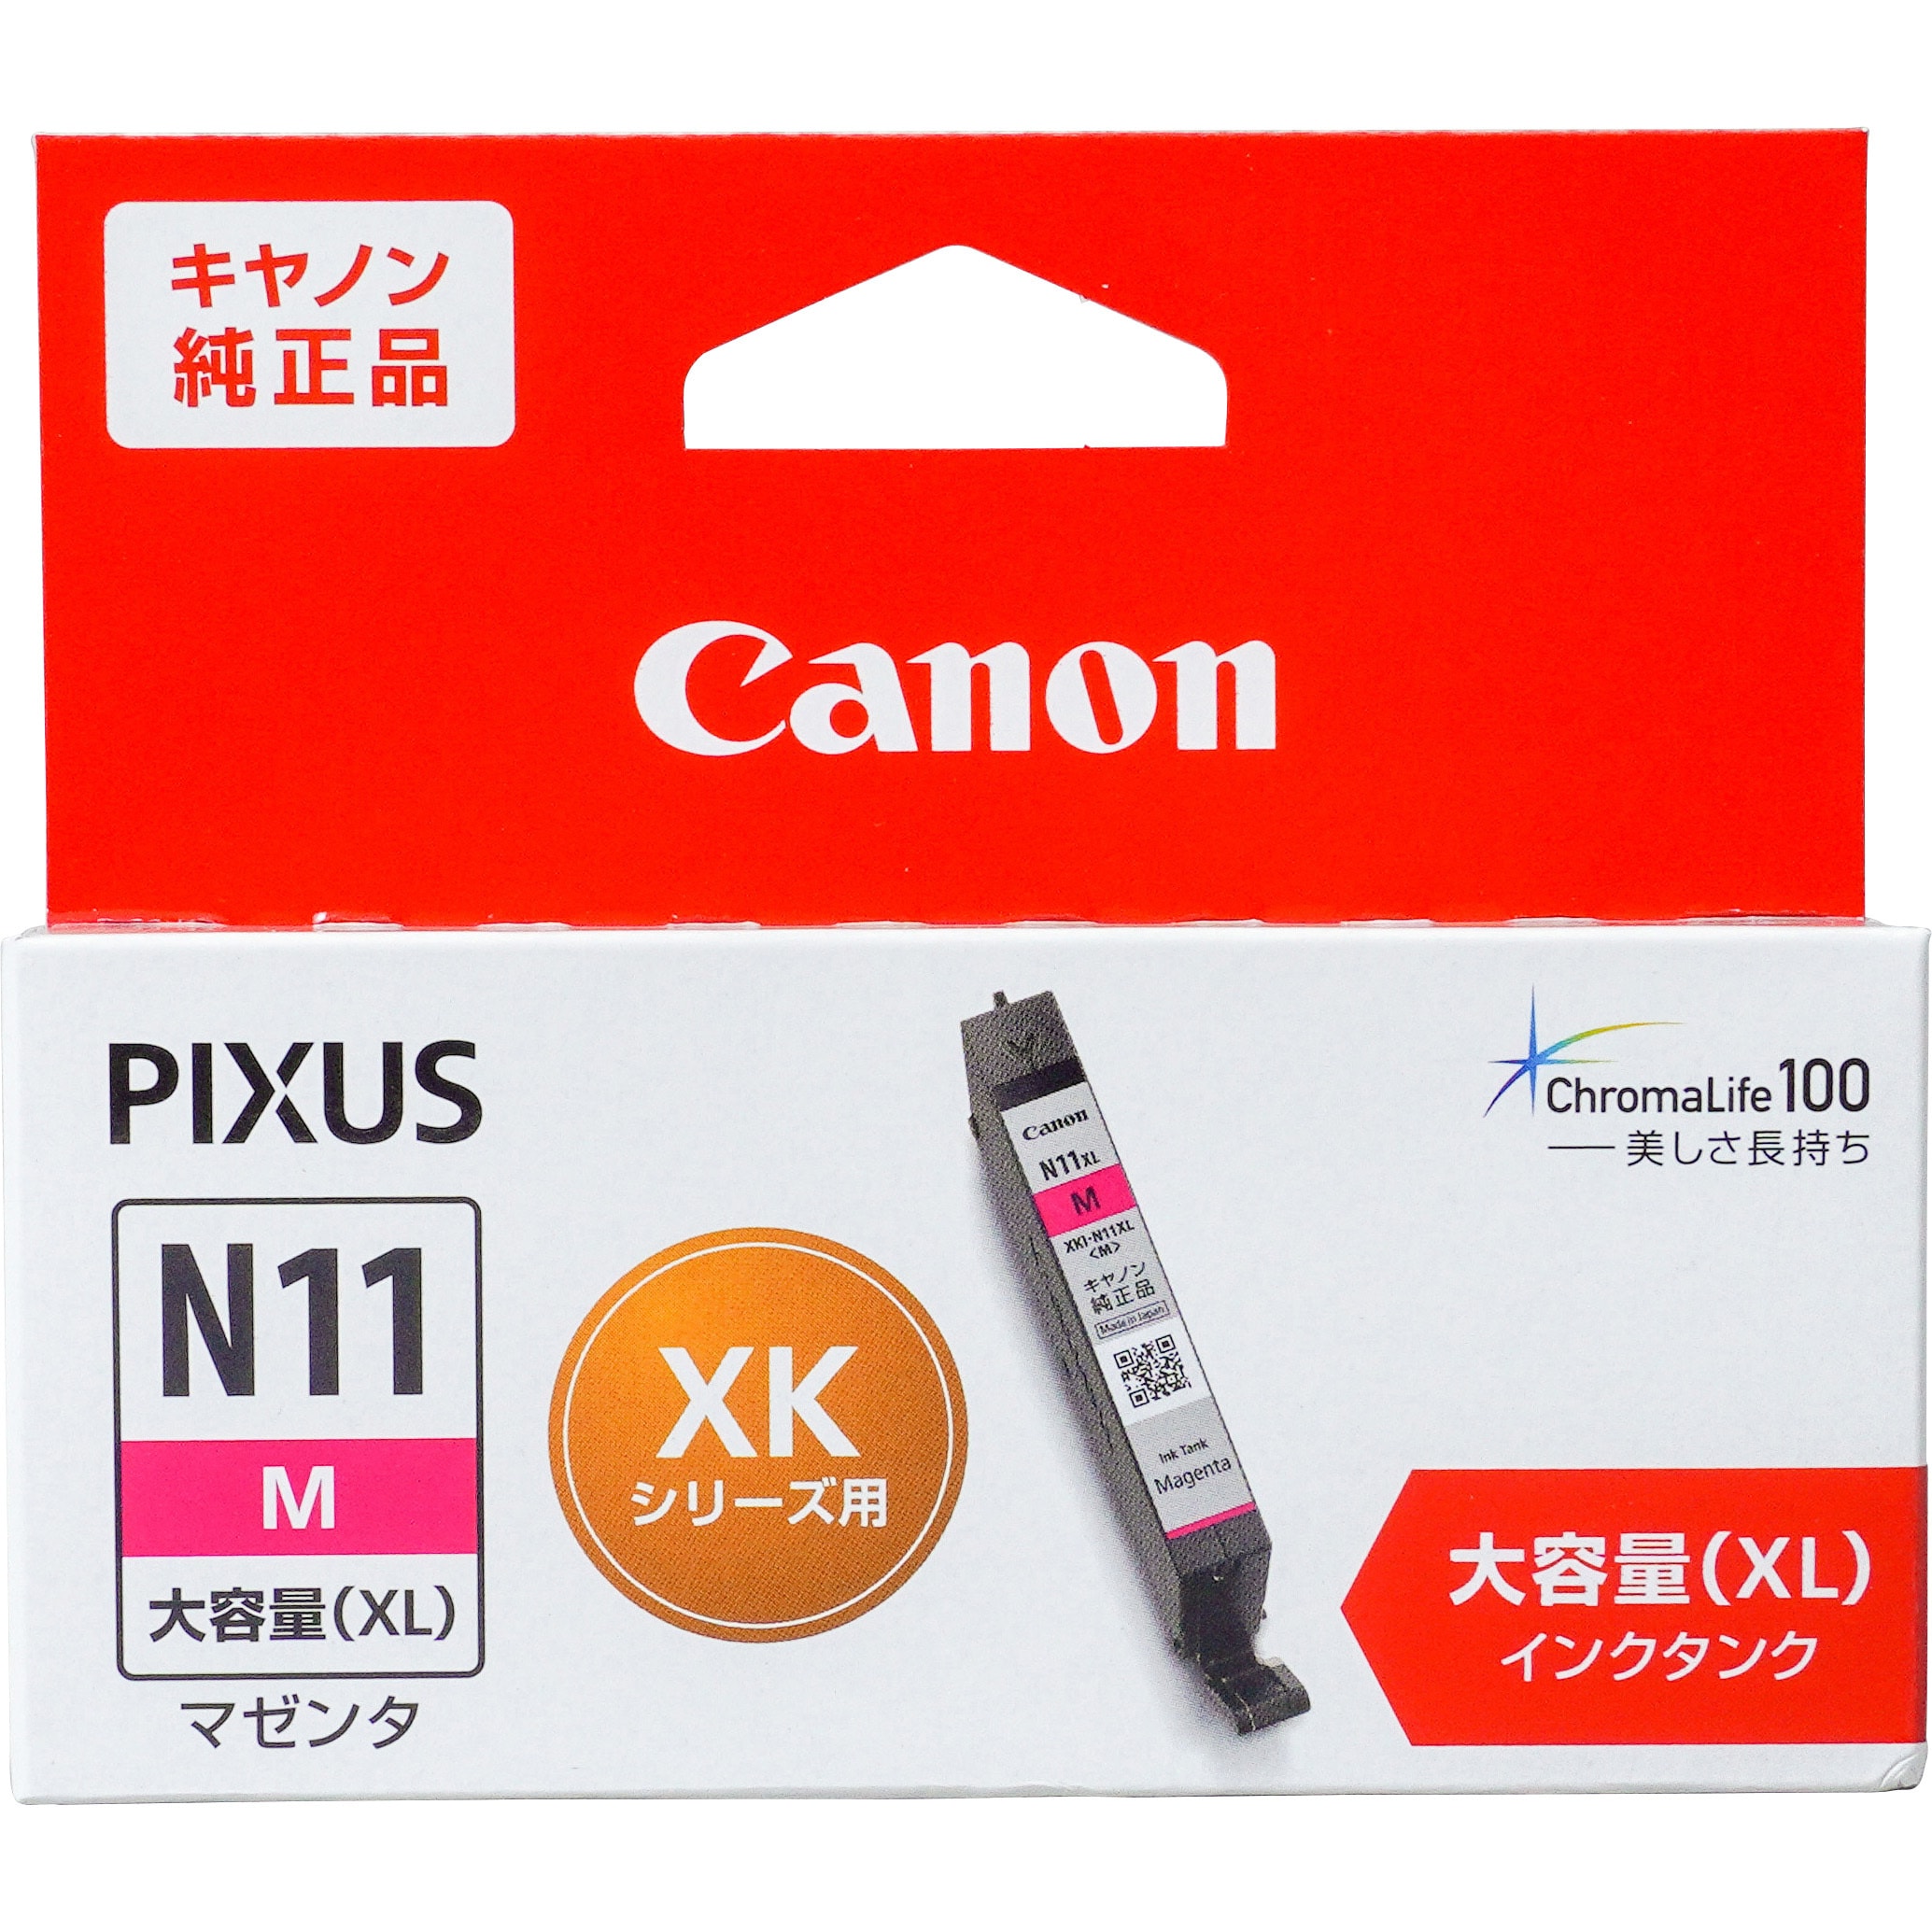 XKI-N11XLM 純正インクカートリッジ Canon XKI-N10/N11 XL 1個 Canon